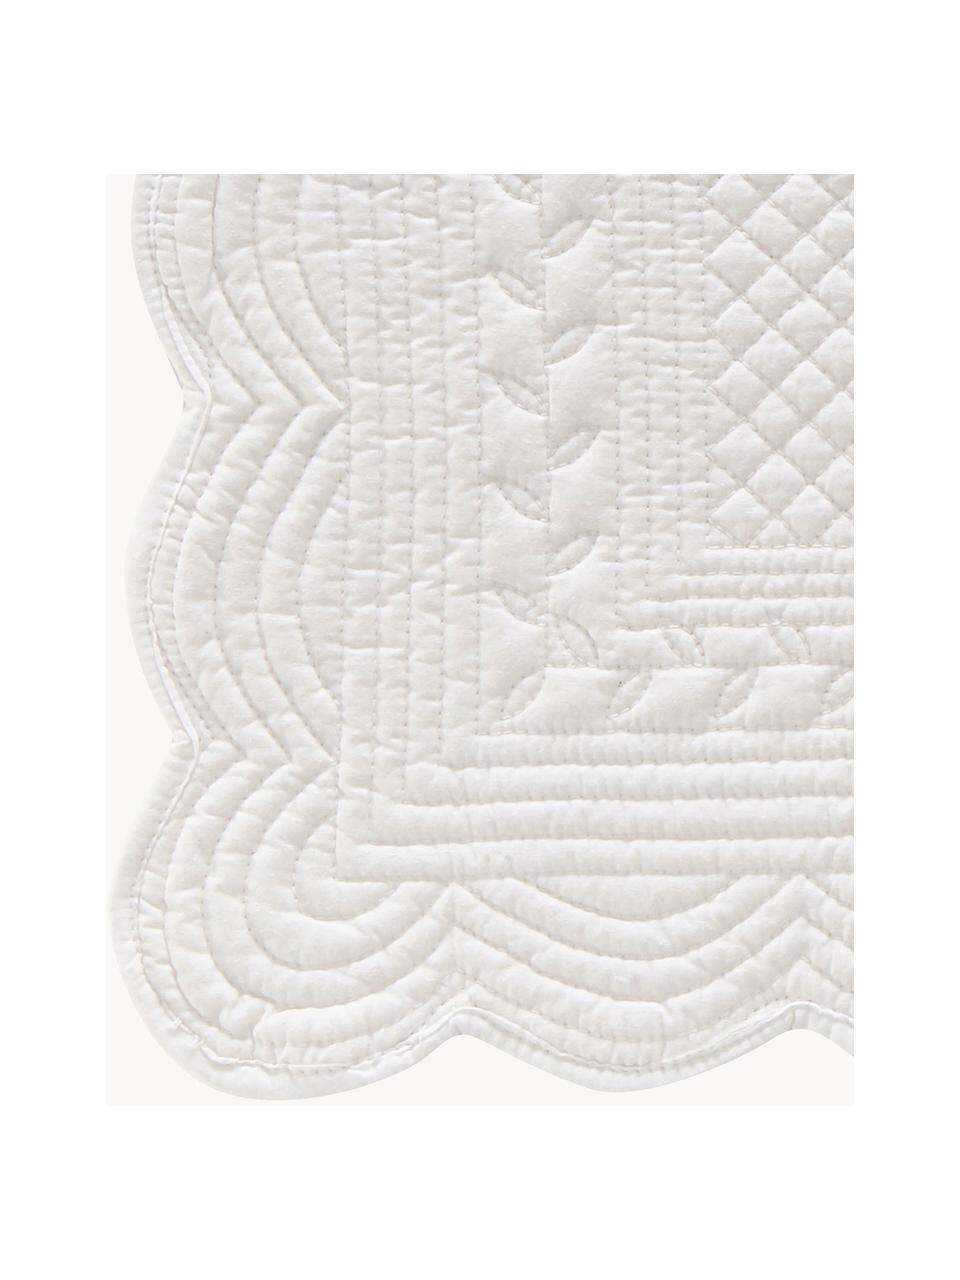 Manteles individuales Boutis, 2 uds., 100% algodón, Blanco, An 34 x L 48 cm